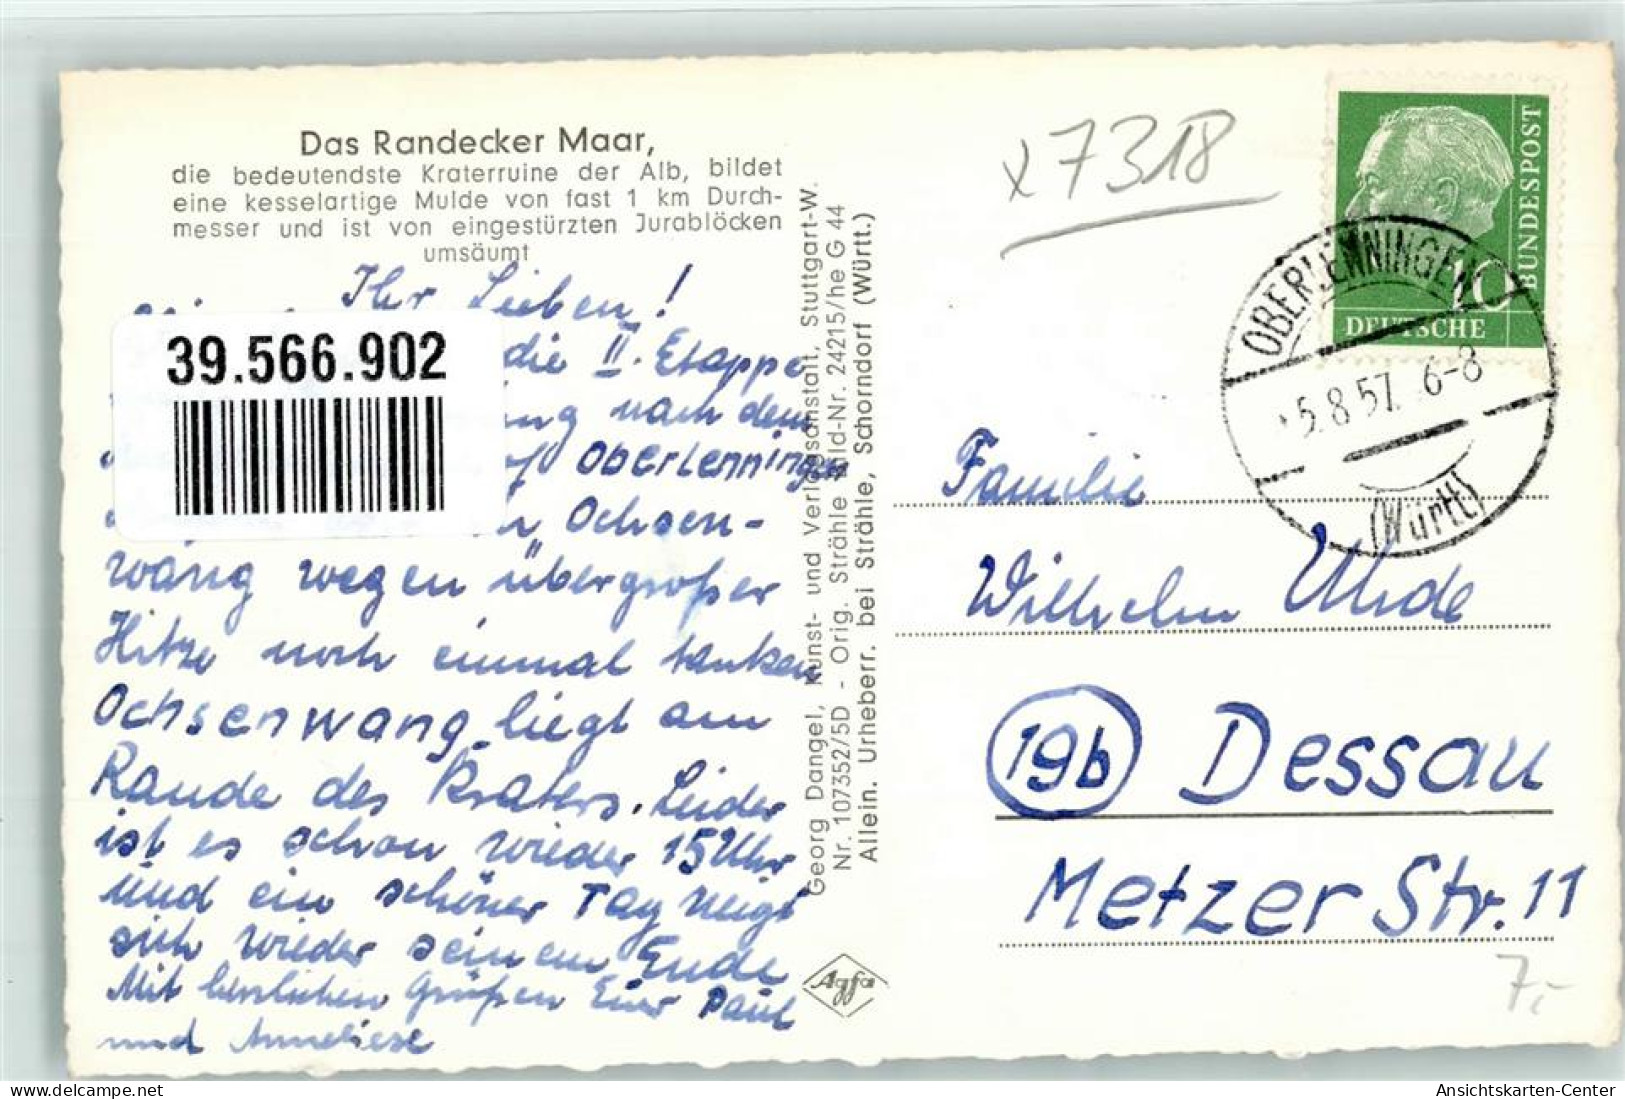 39566902 - Ochsenwang - Esslingen